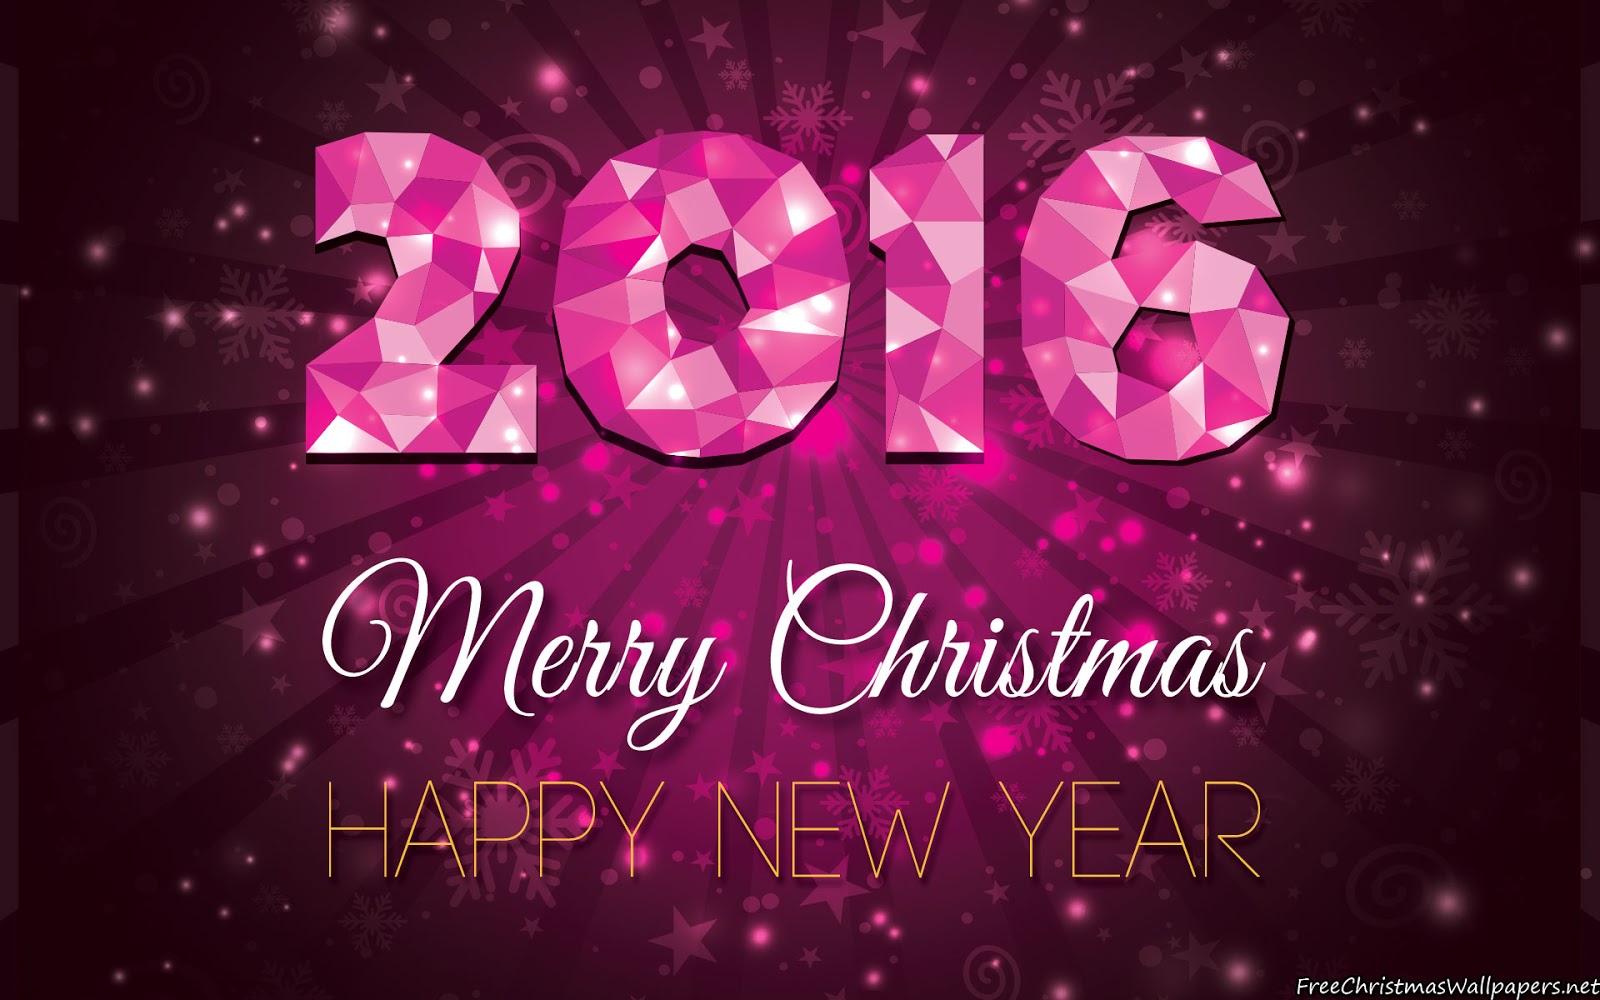 happy new year 2015 image